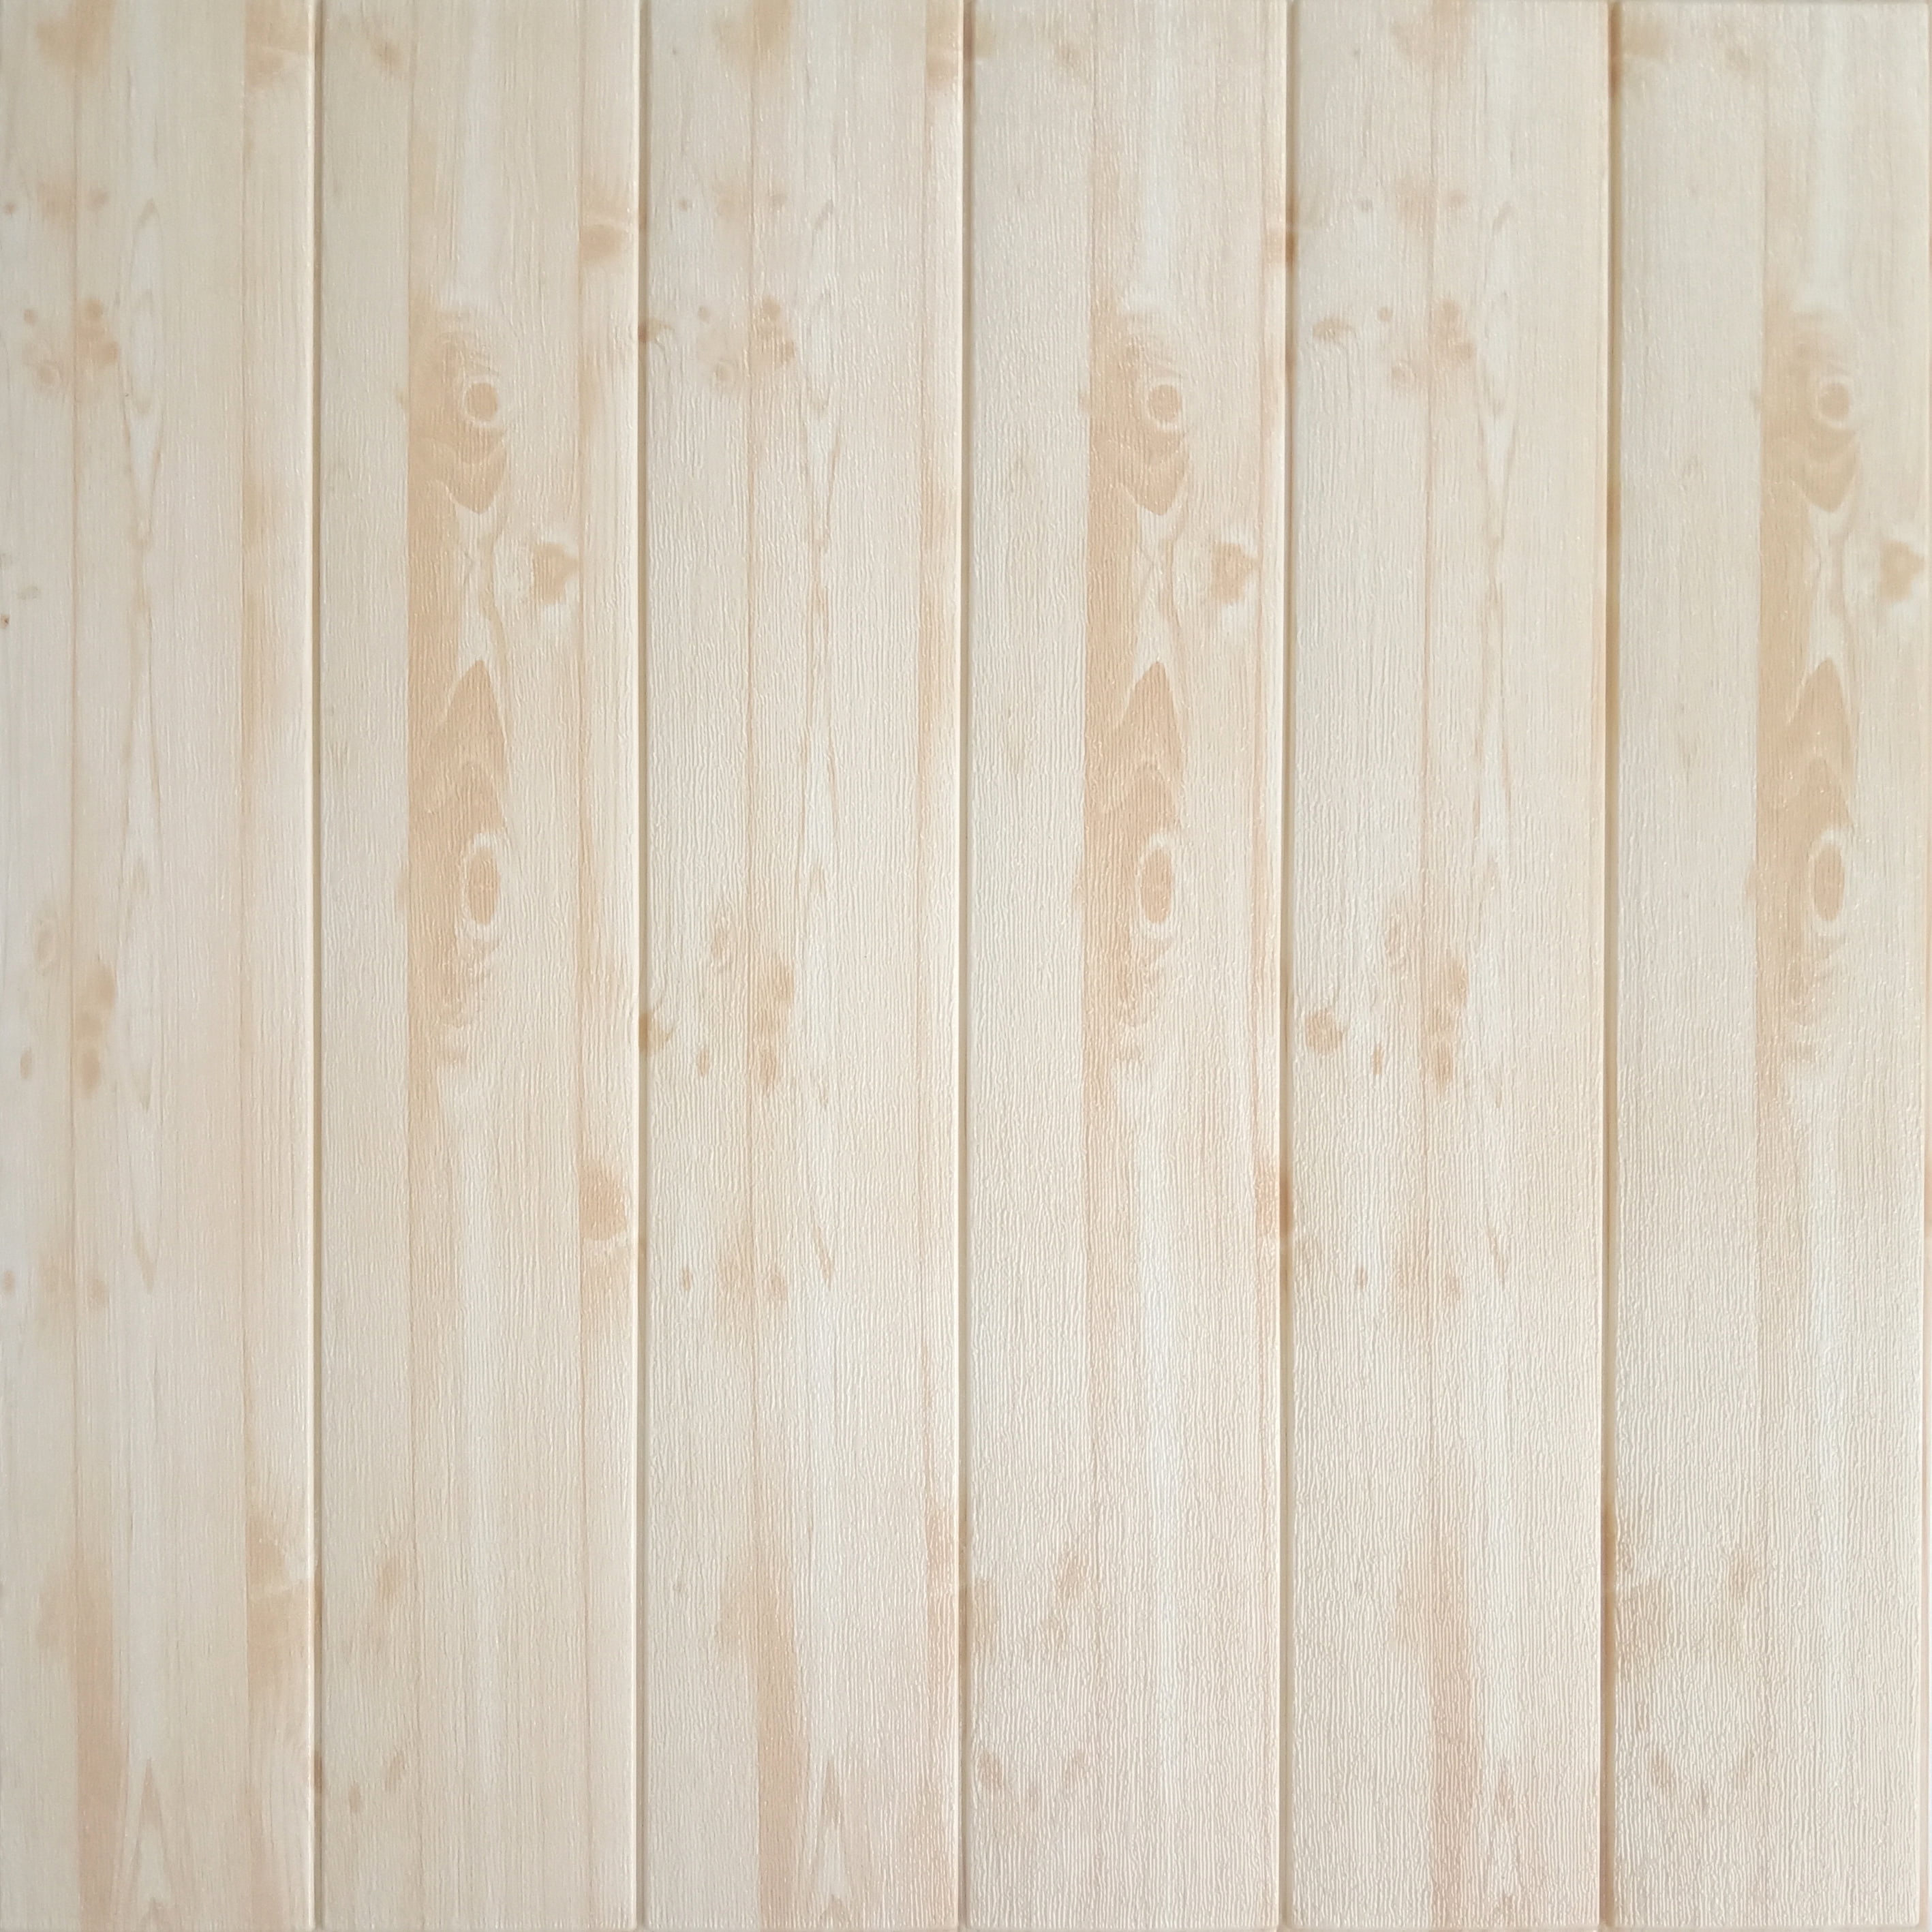 2.3*2.3ft Self-adhesive Waterproof 3D Wood Grain Wall Sticker Home Decor